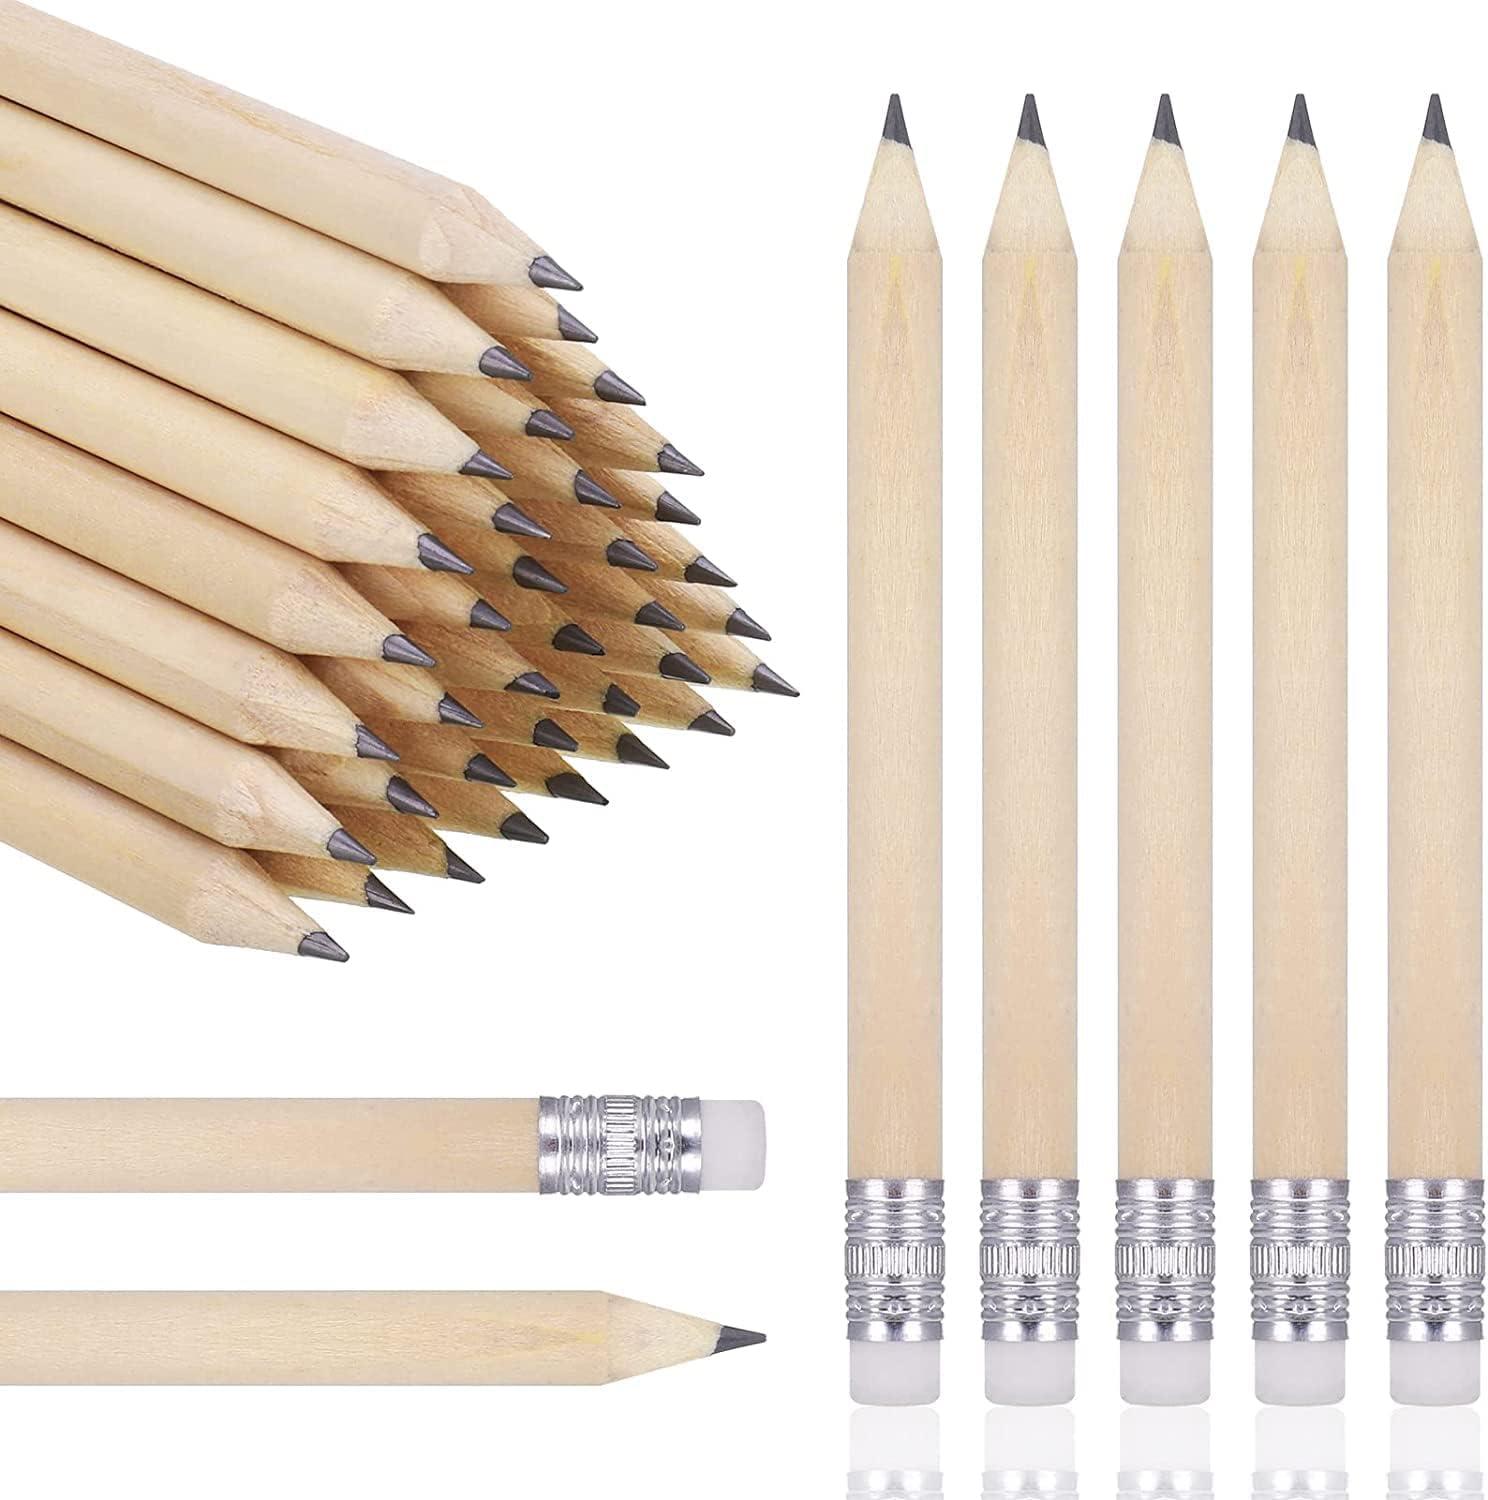 100 pieces golf pencils, 4 inch half pencils sharpened pencils with erasers pencils  thjopokeel b0c73g6lyh